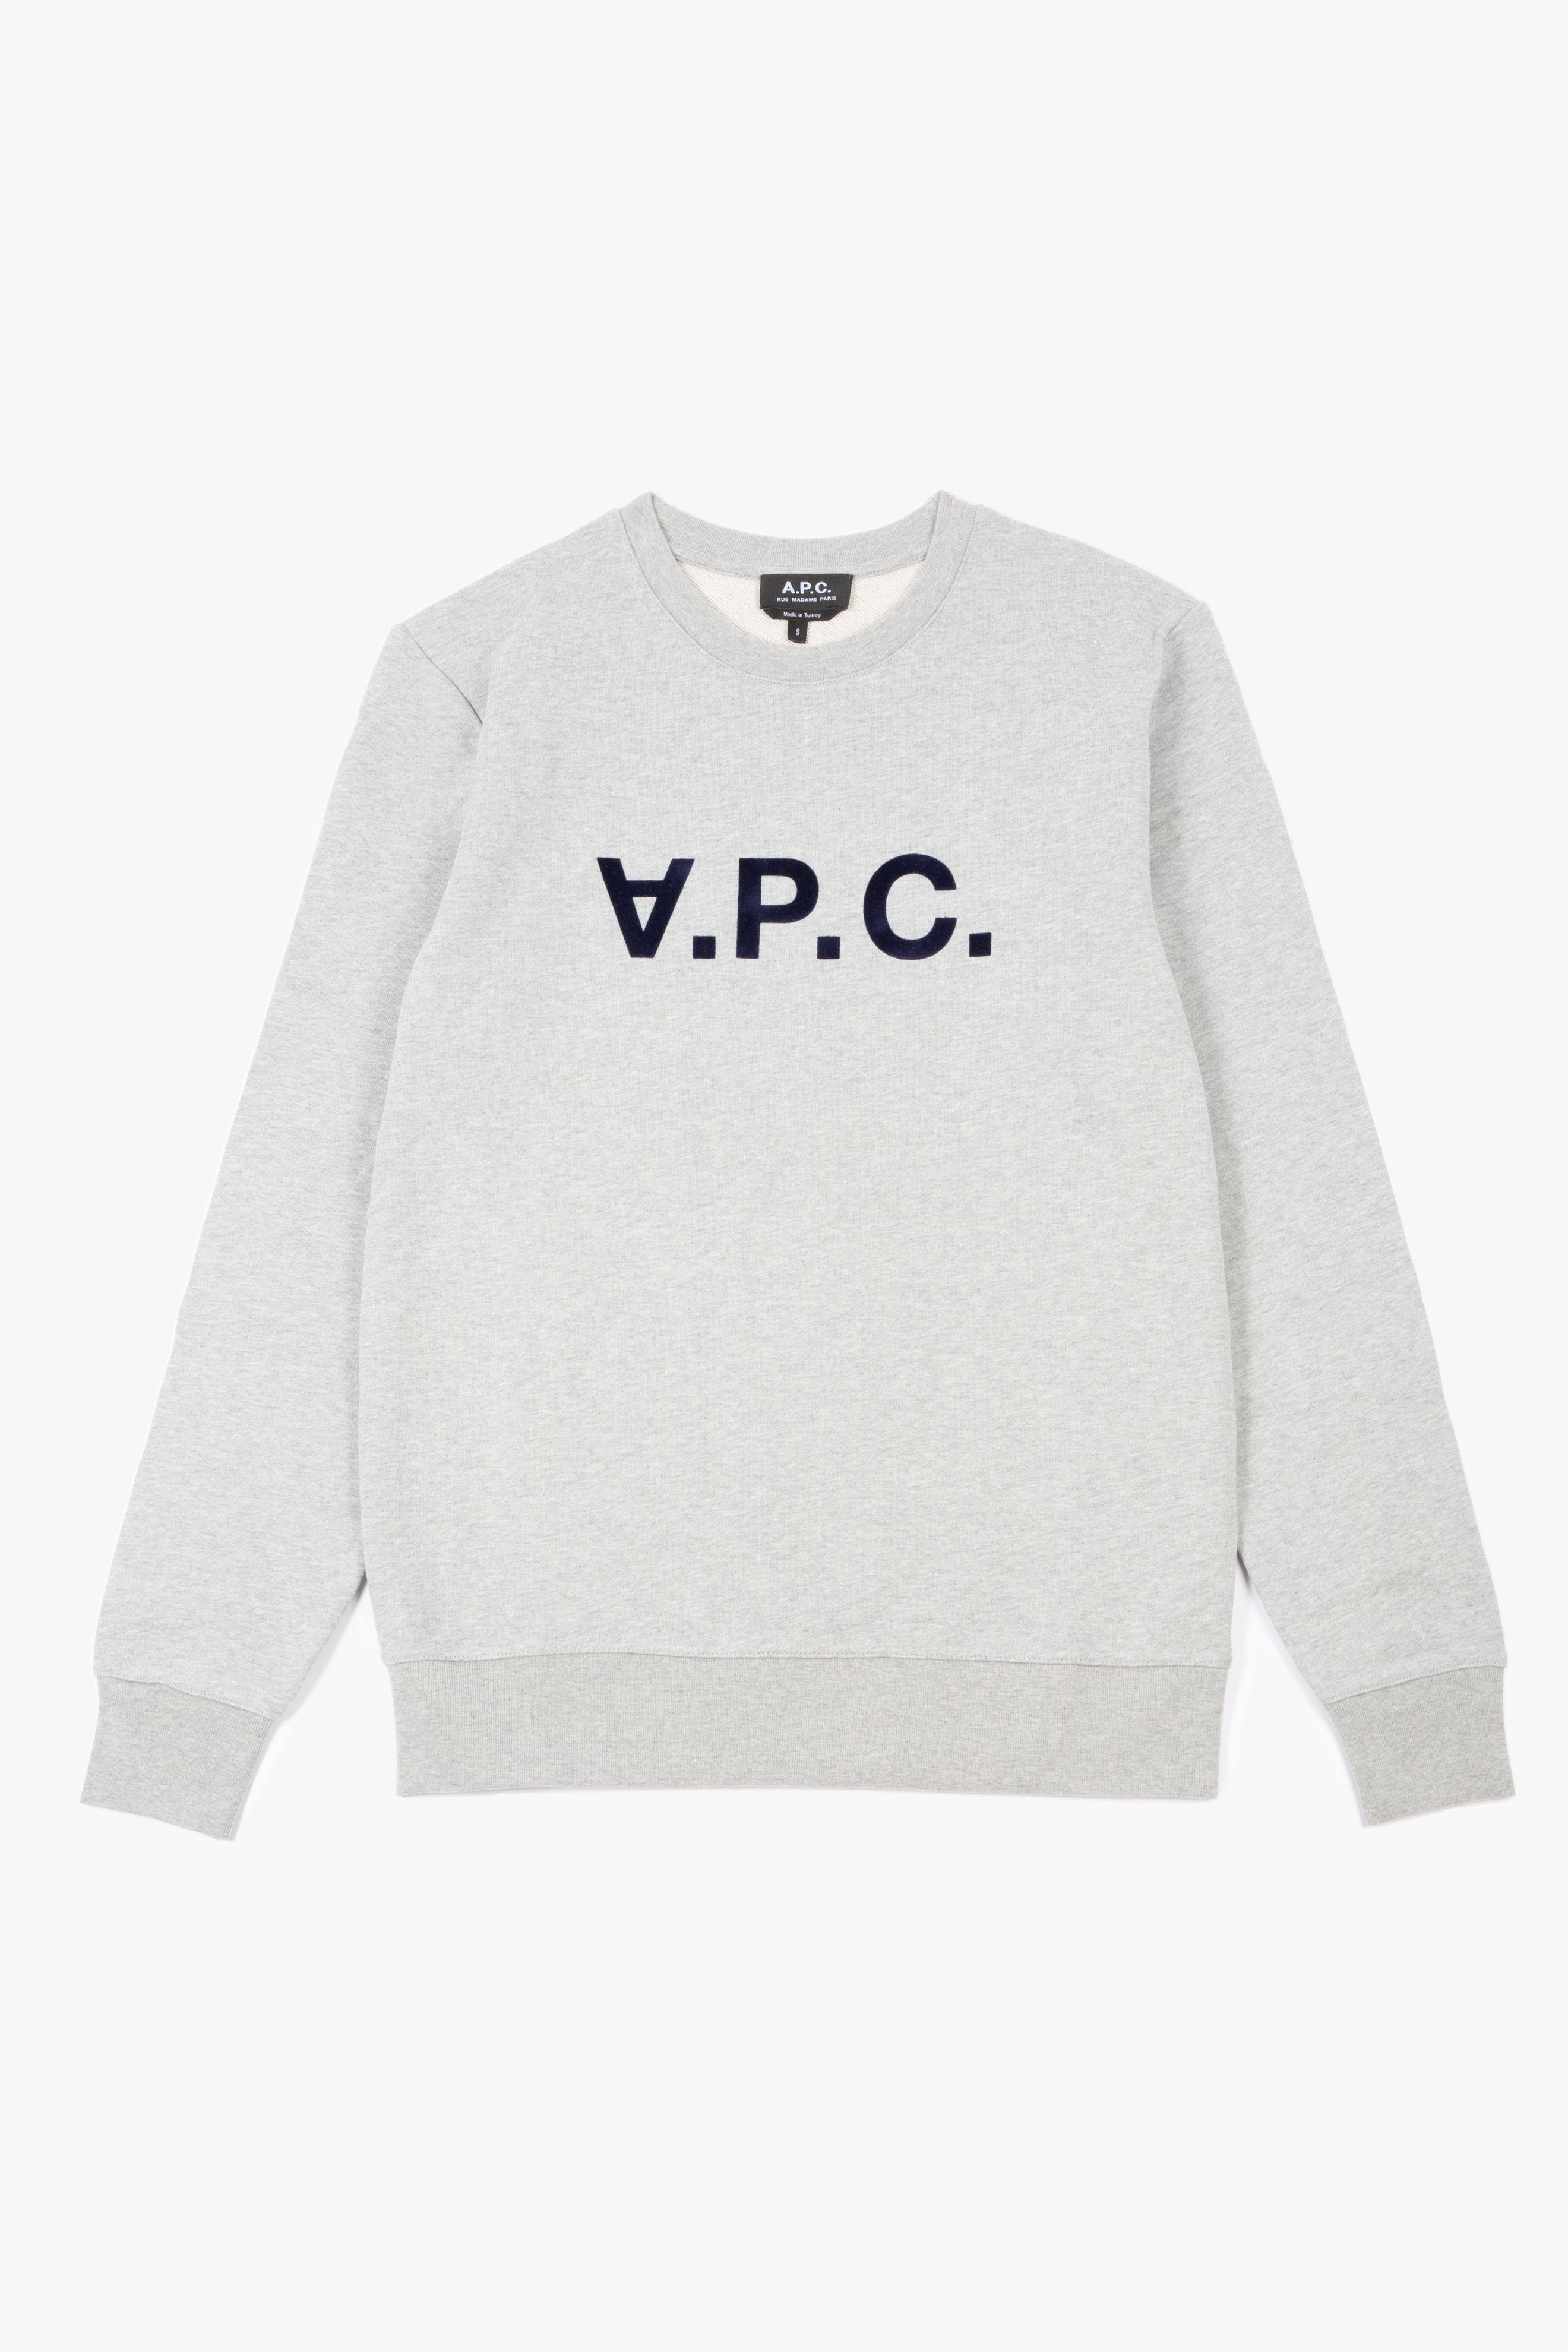 VPC Sweatshirt Grey